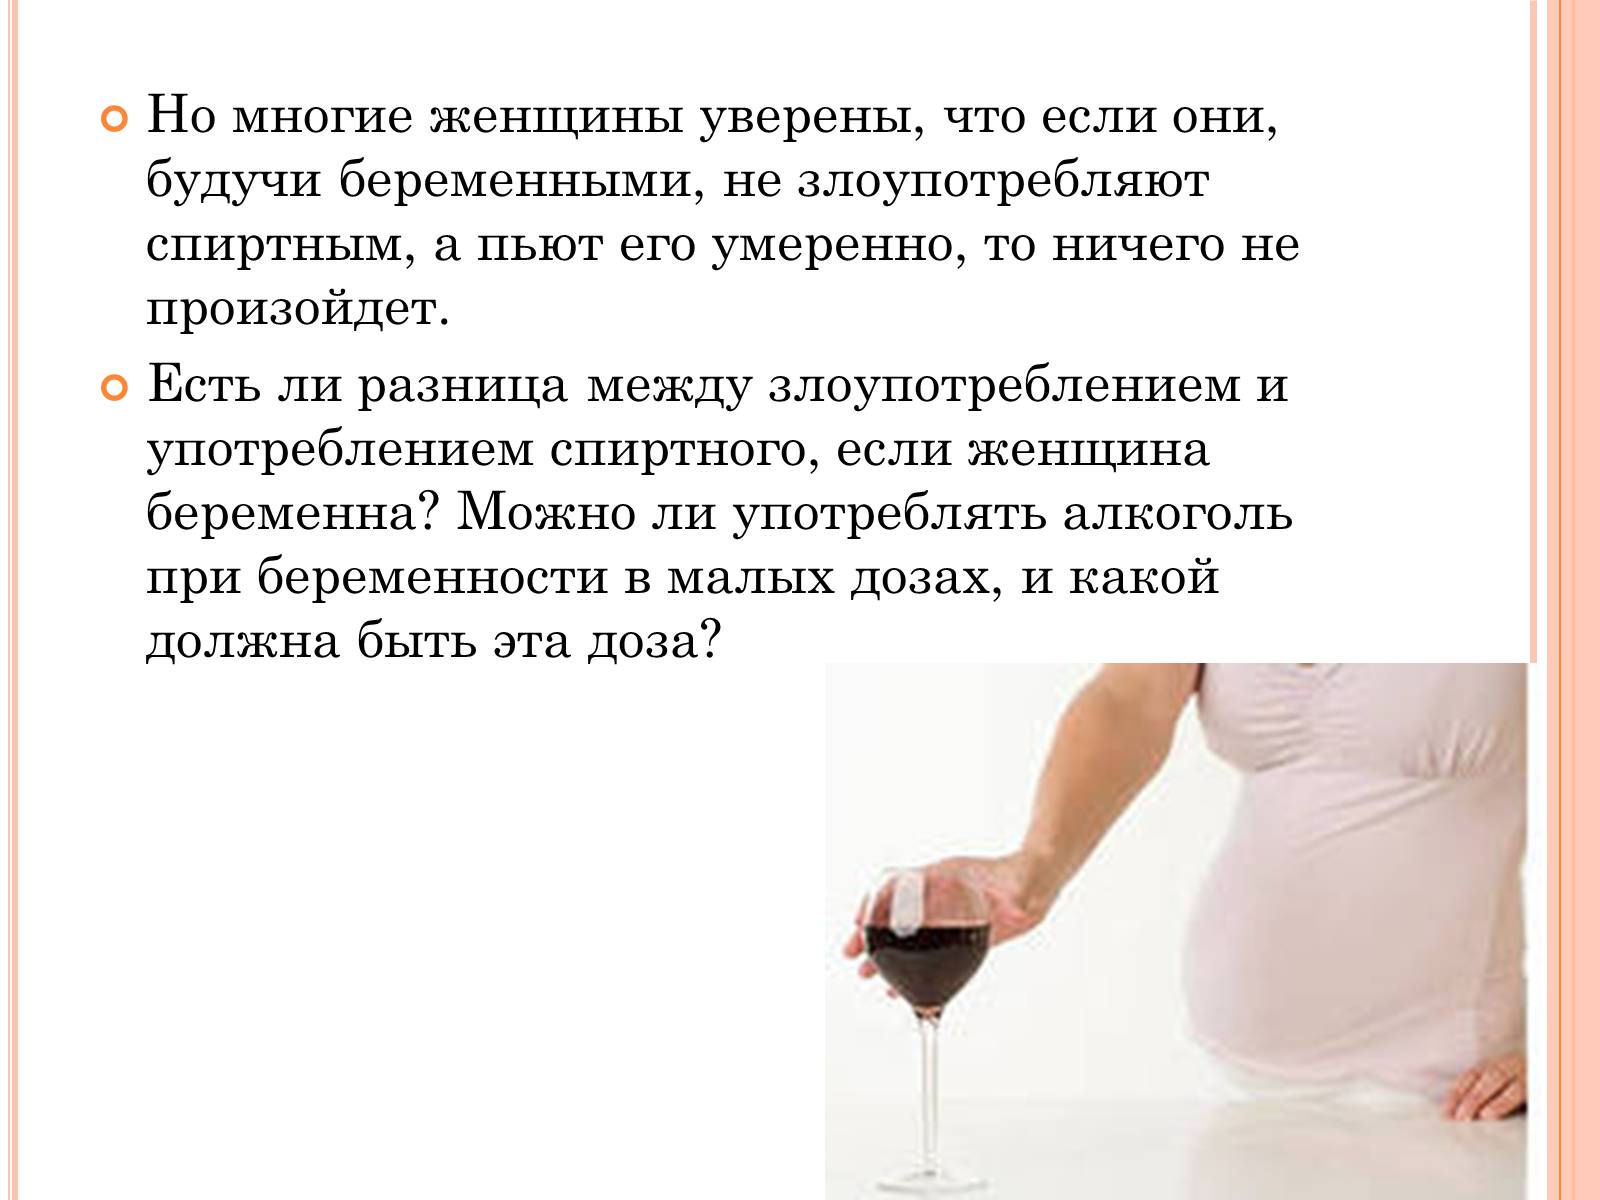 Презентація на тему «Беременность и алкоголь» - Слайд #6